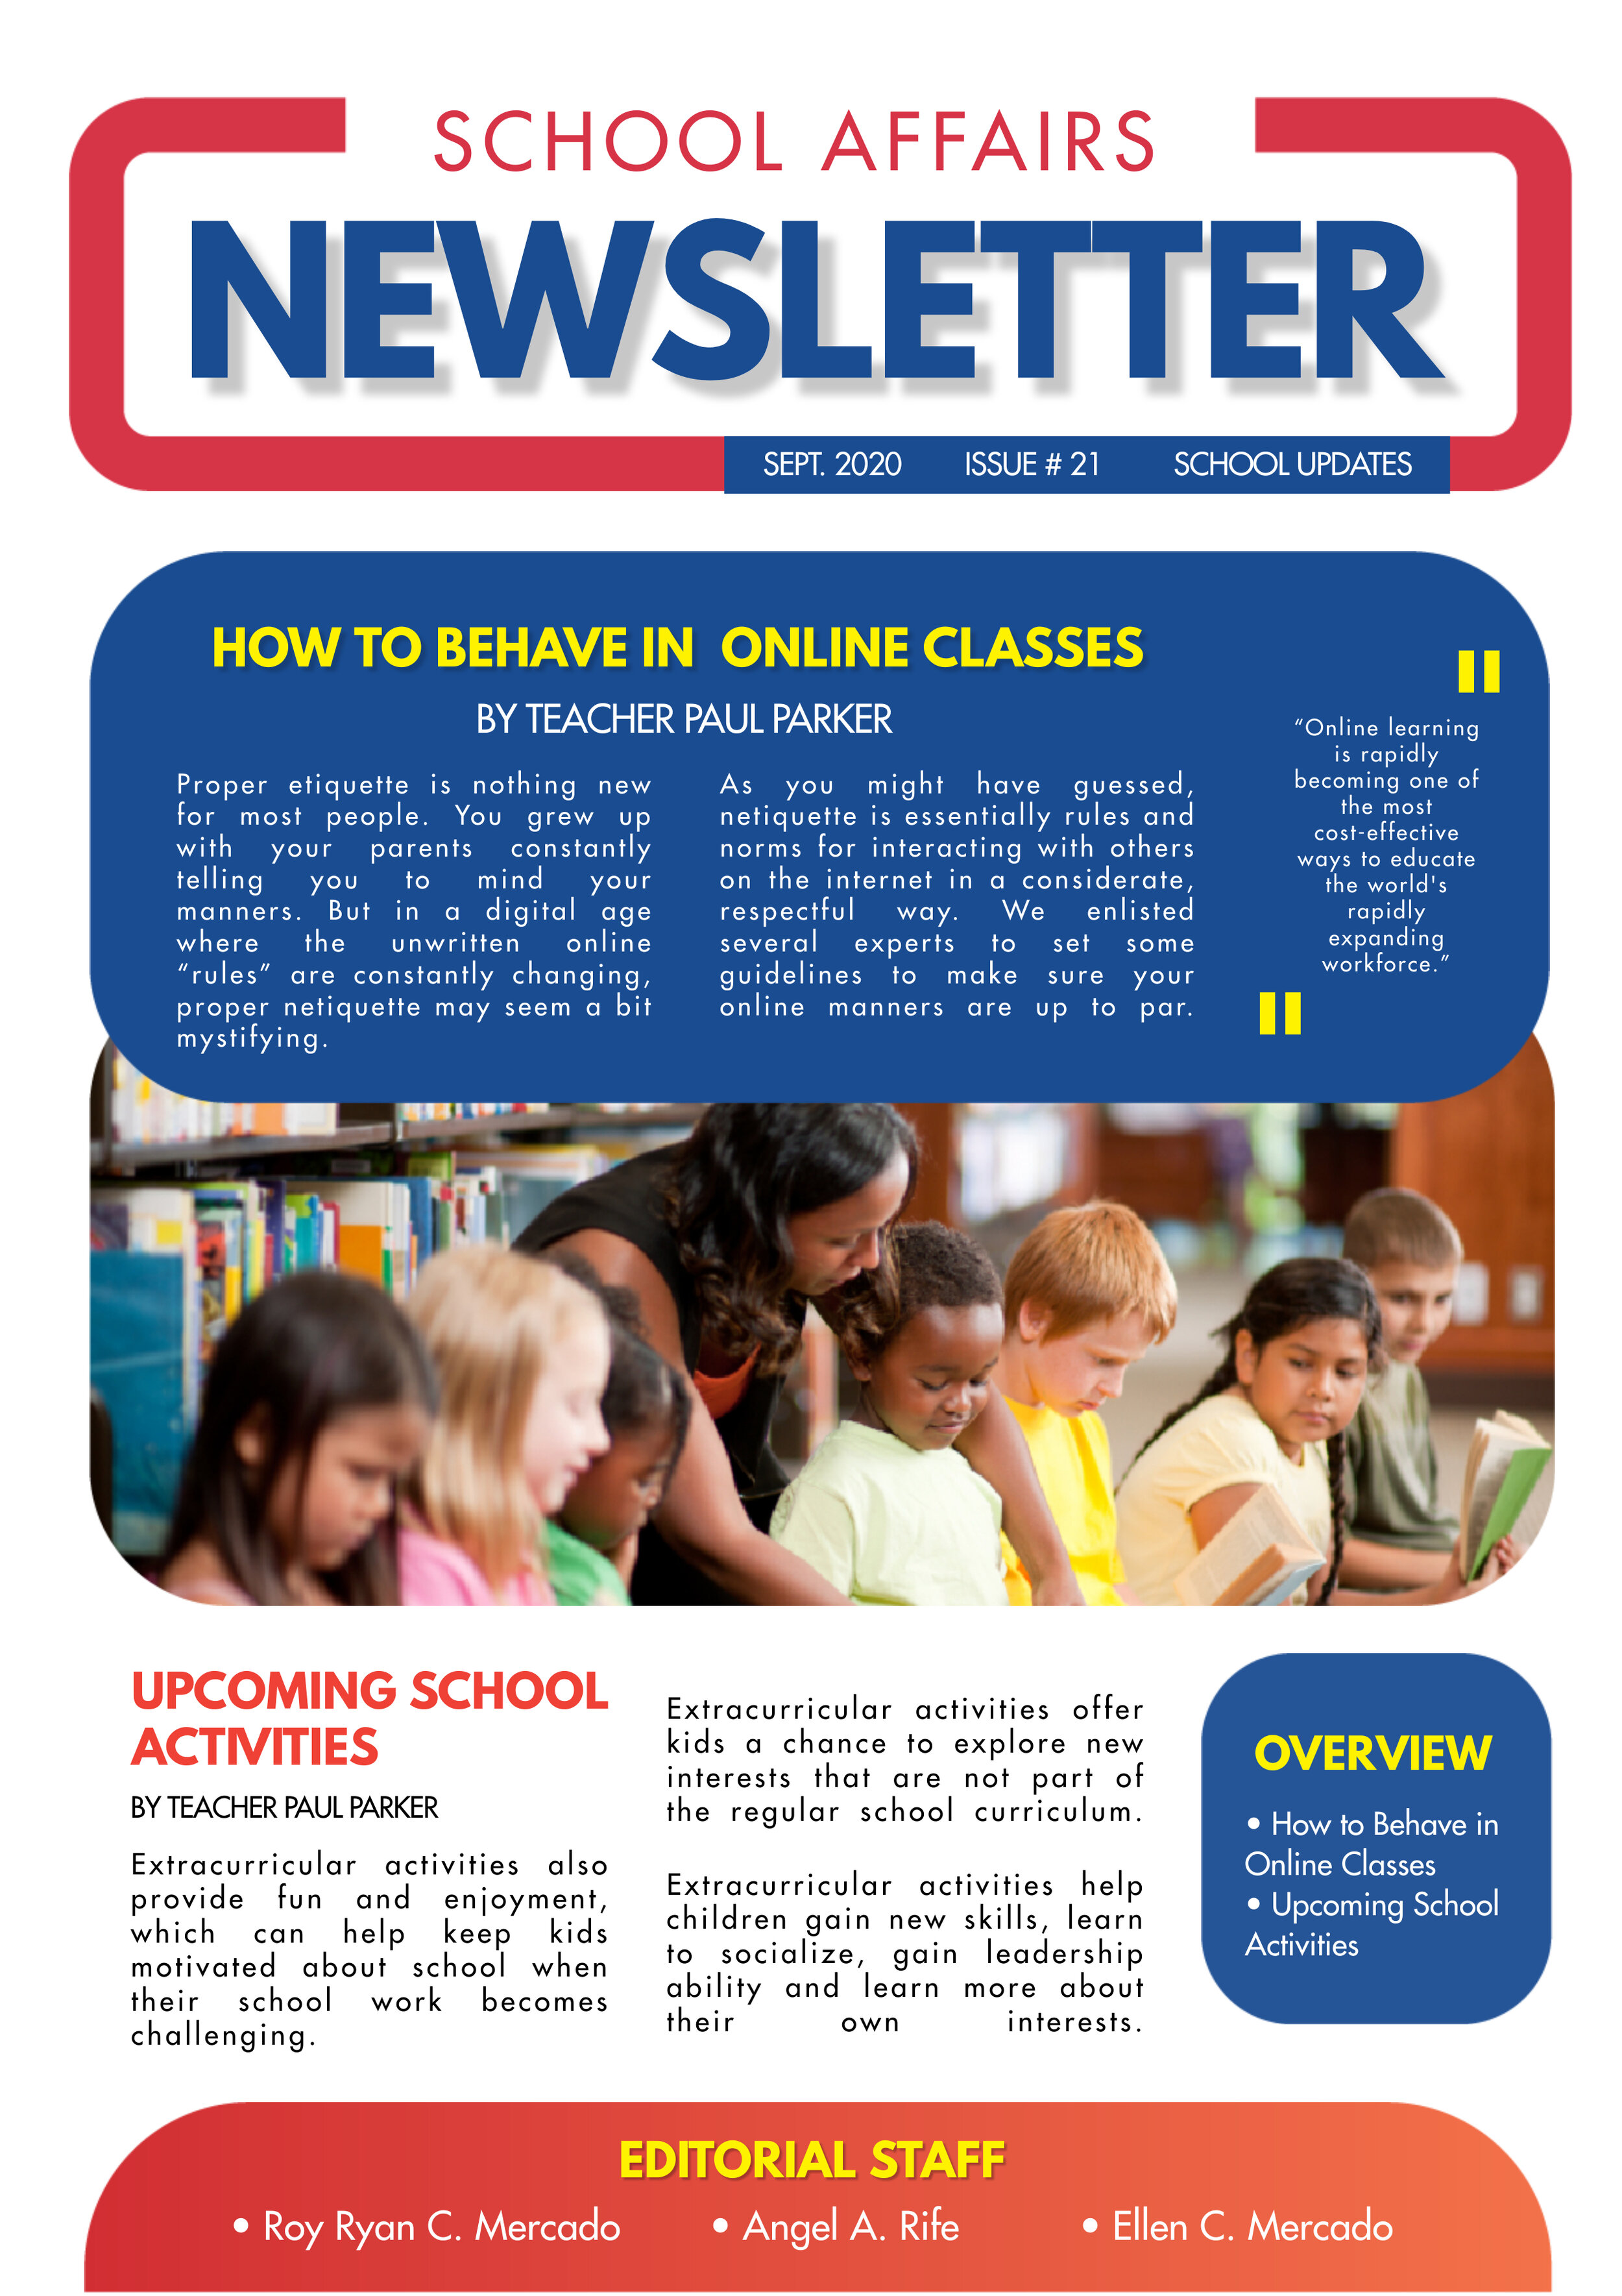 School affairs newsletter template